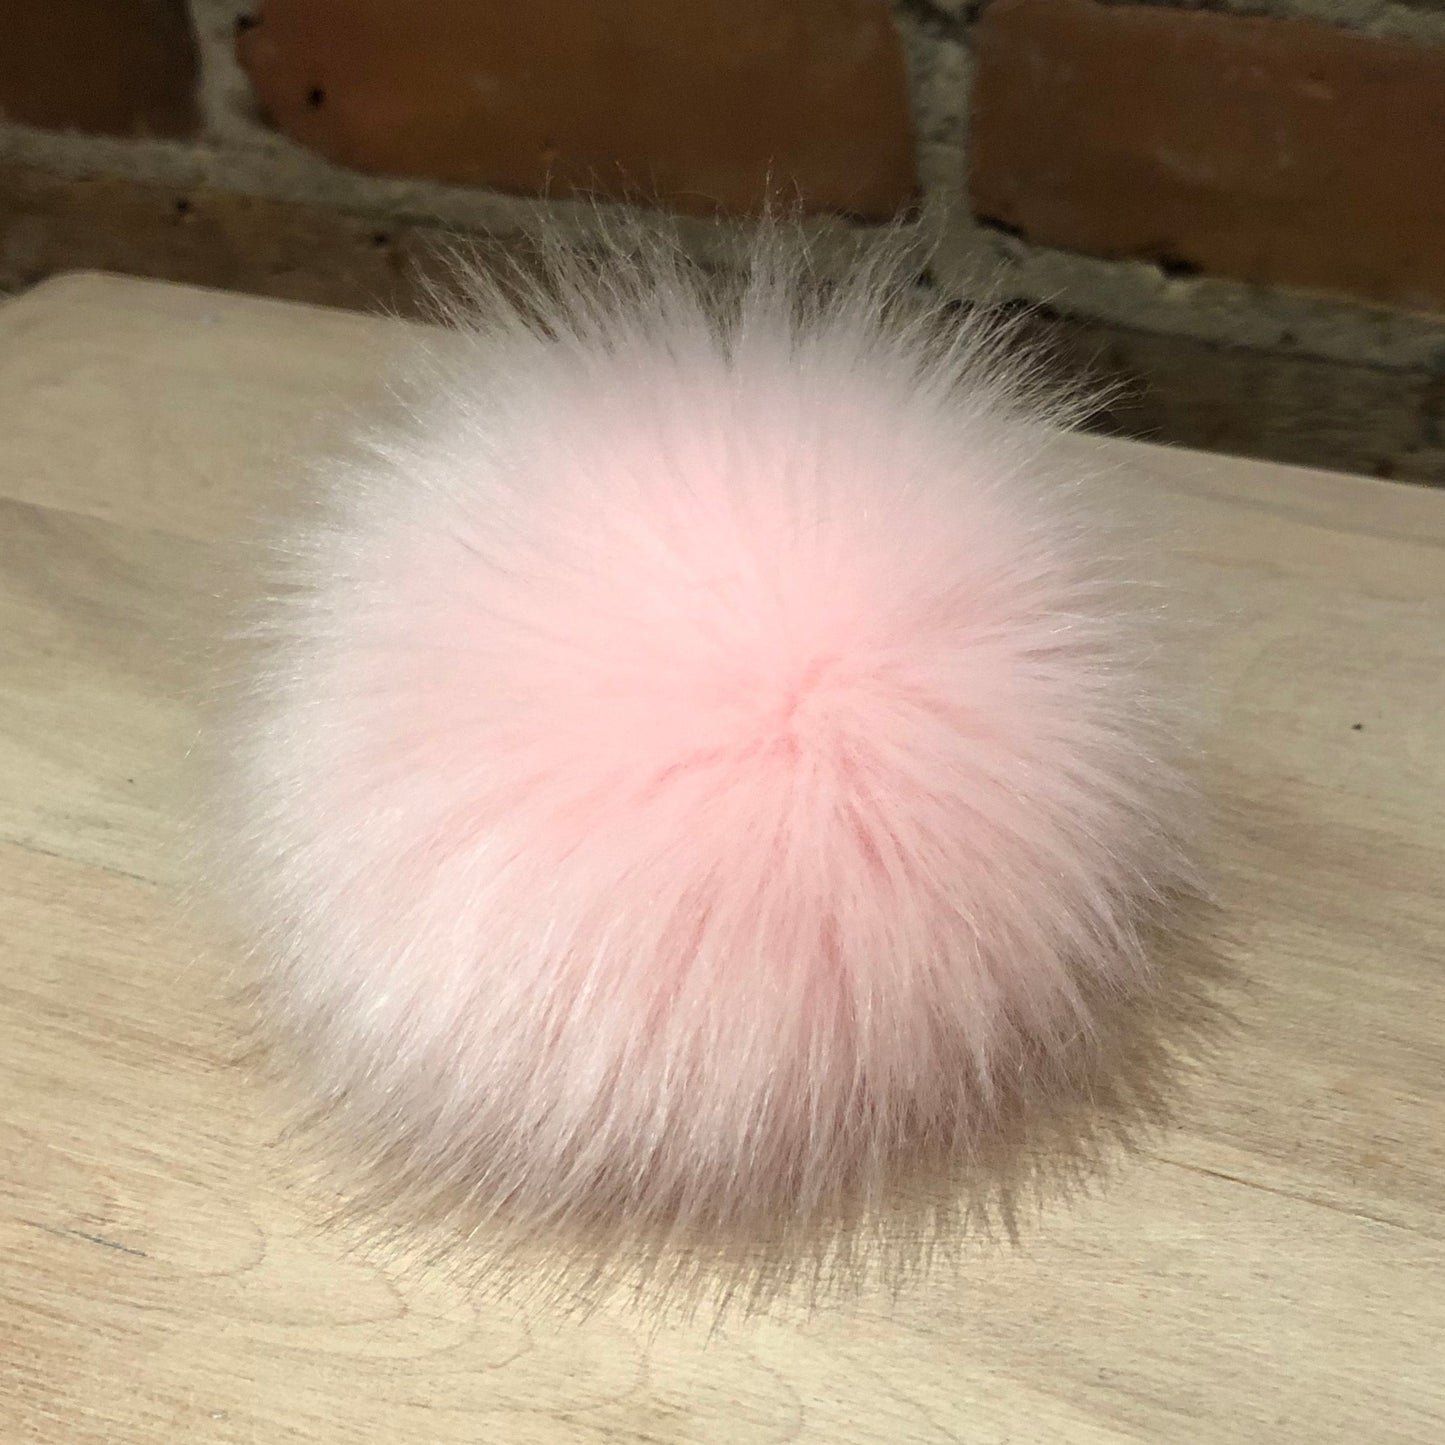 Bubblegum Pink Faux Fur Pom Pom Embellishment for Knitting Projects